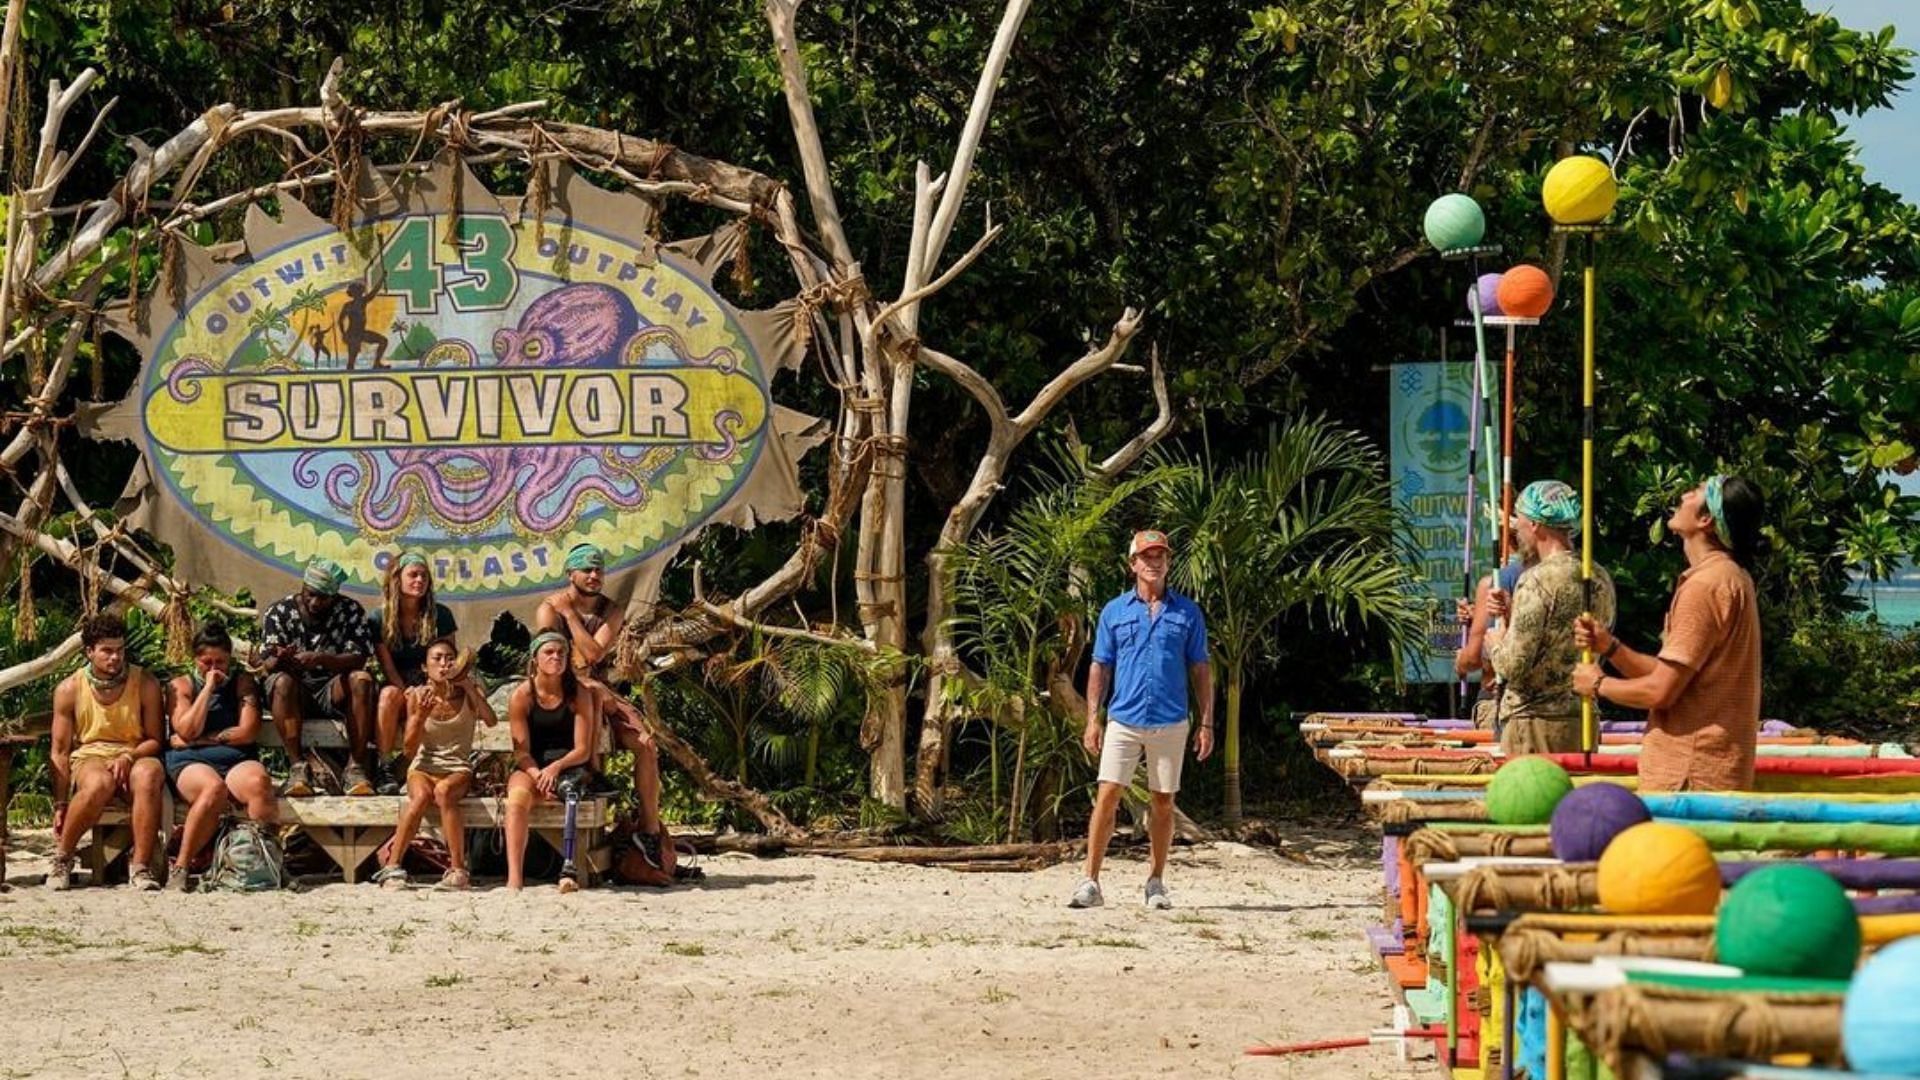 Survivor Season 43 saw double eliminations this week